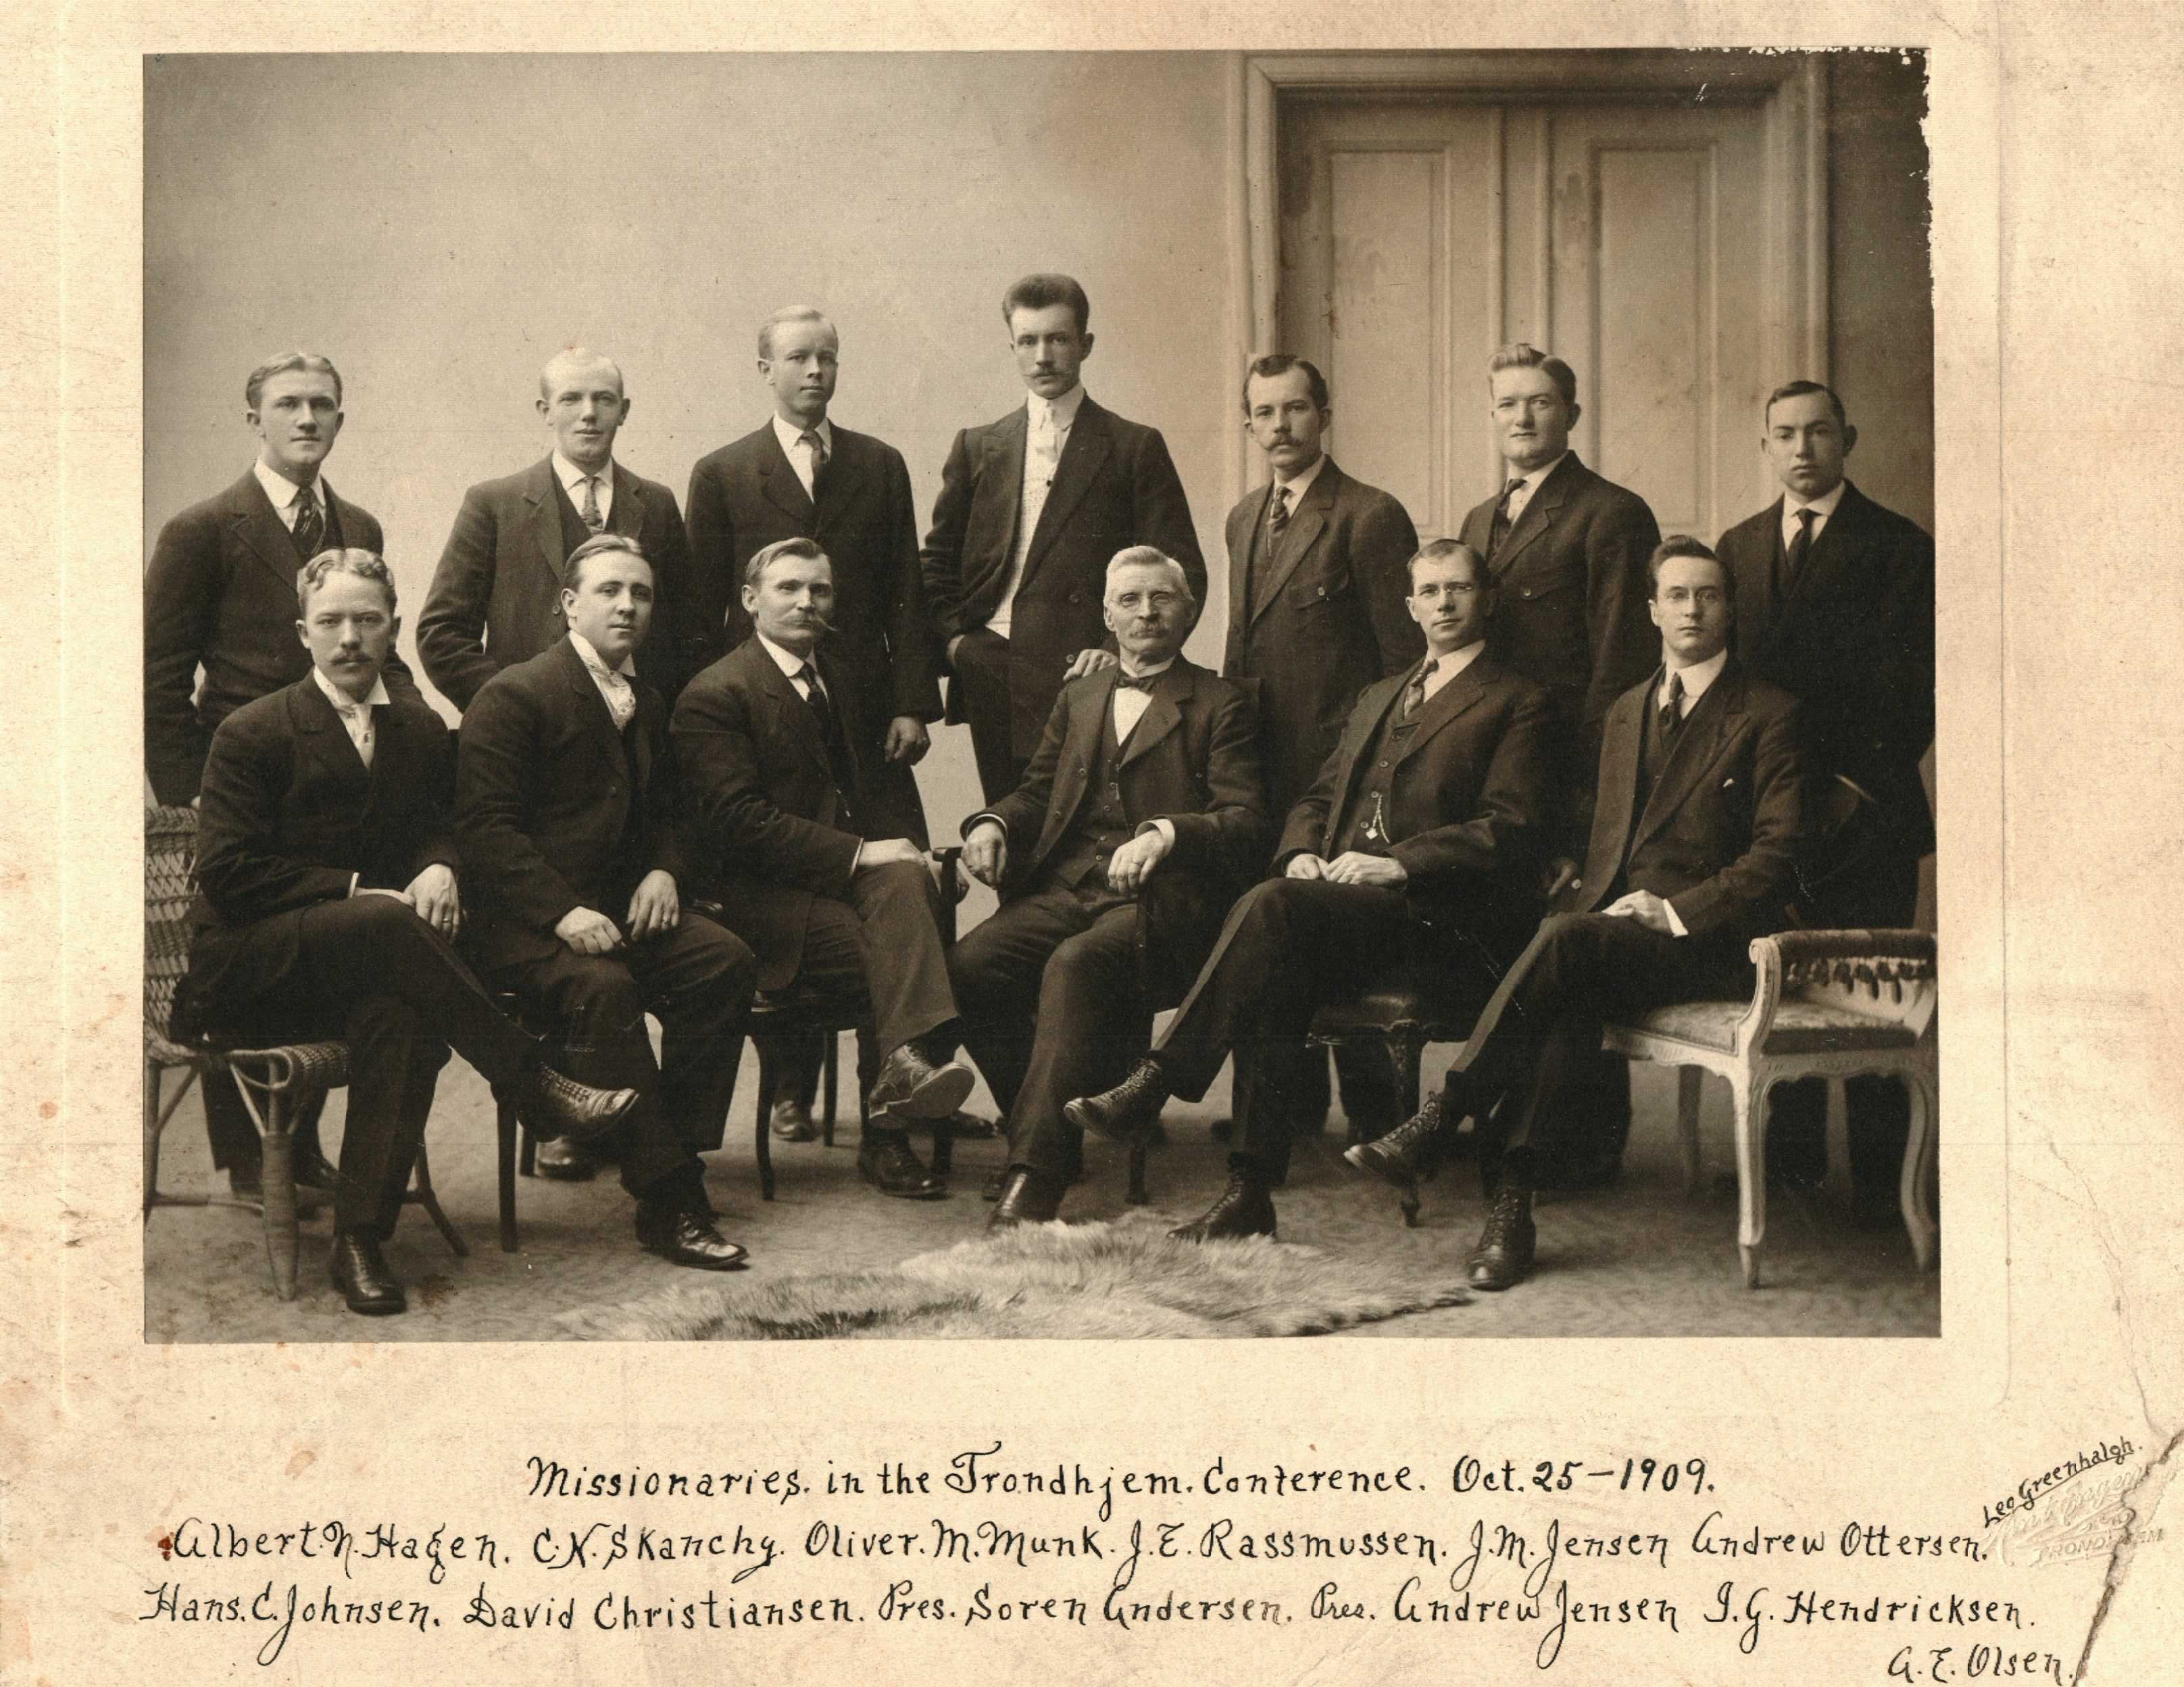 Trondhjem Conference, October 1909